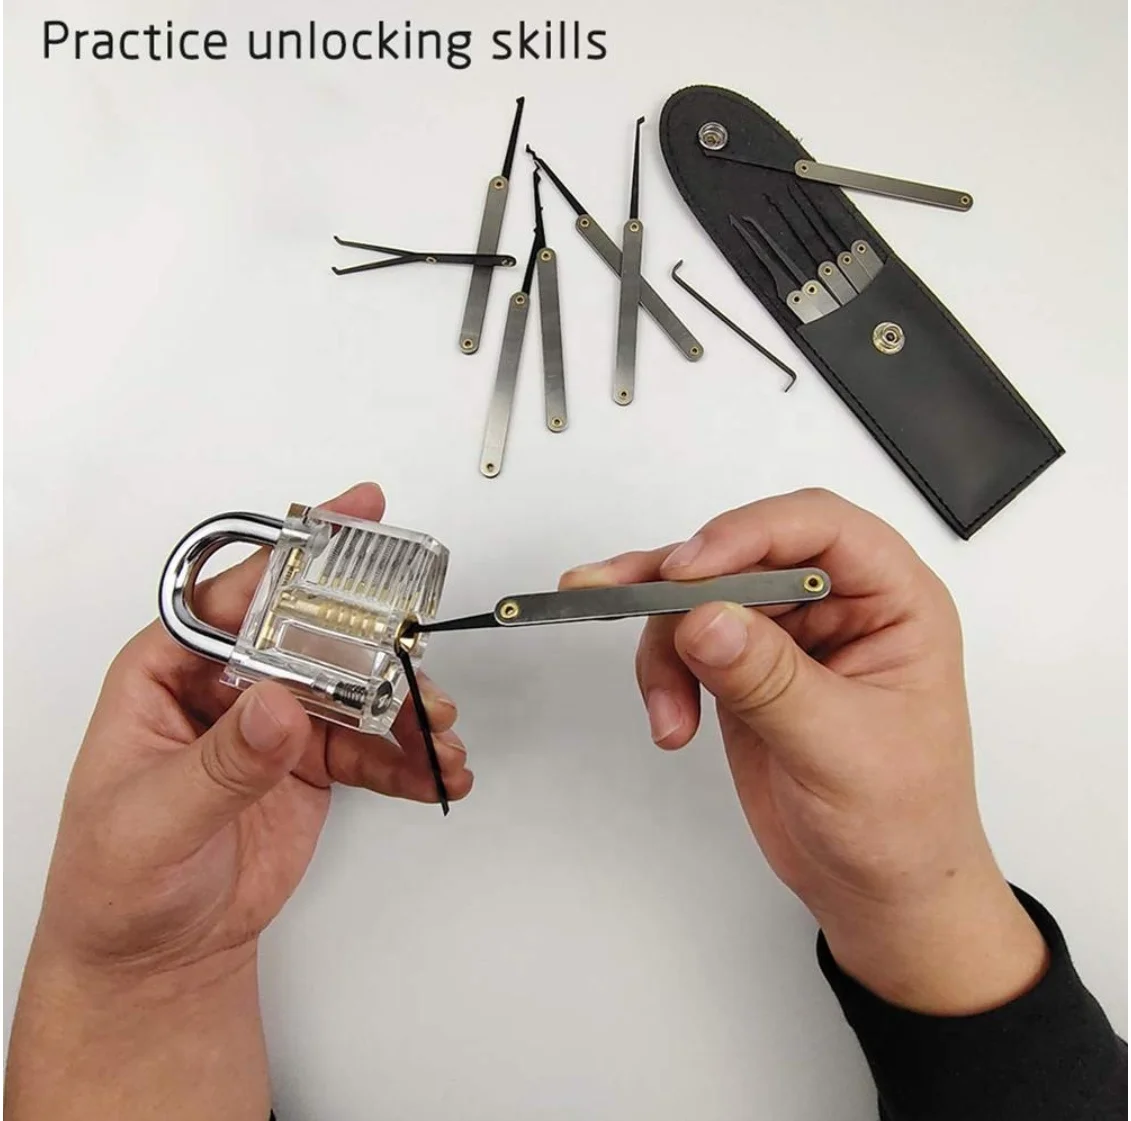 AJF Professional Locksmith Unlocking Lock Pick Set Key Extractor Tool 15pcs Lock Pick Set Lock Opener TOOLS Stainless CN;ZHE